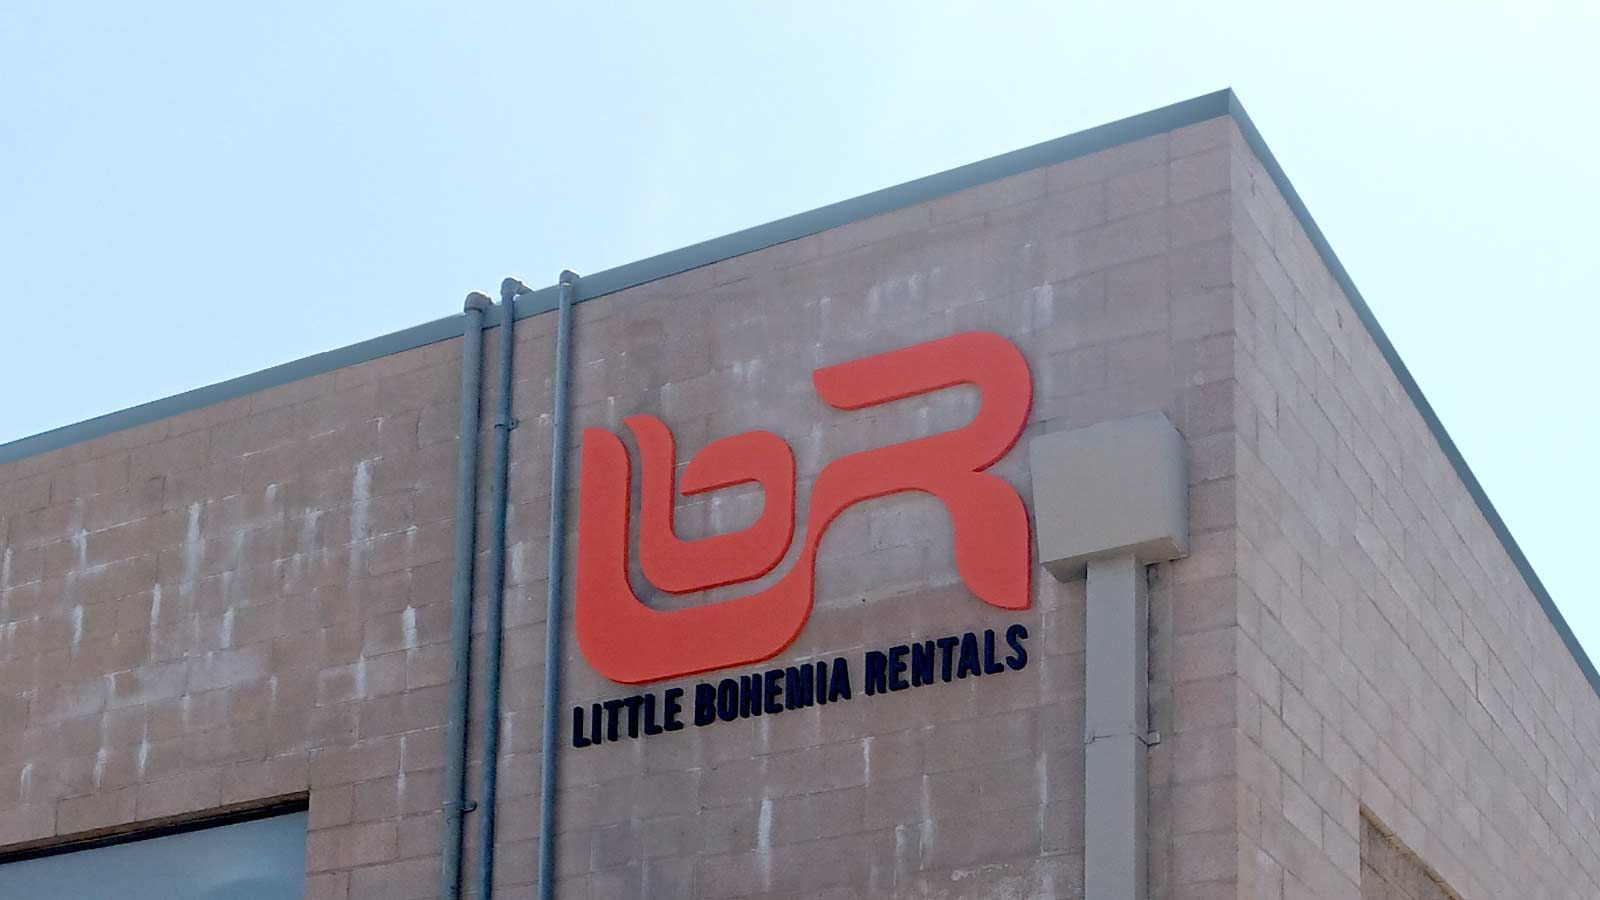 Little Bohemia Rentals building top sign